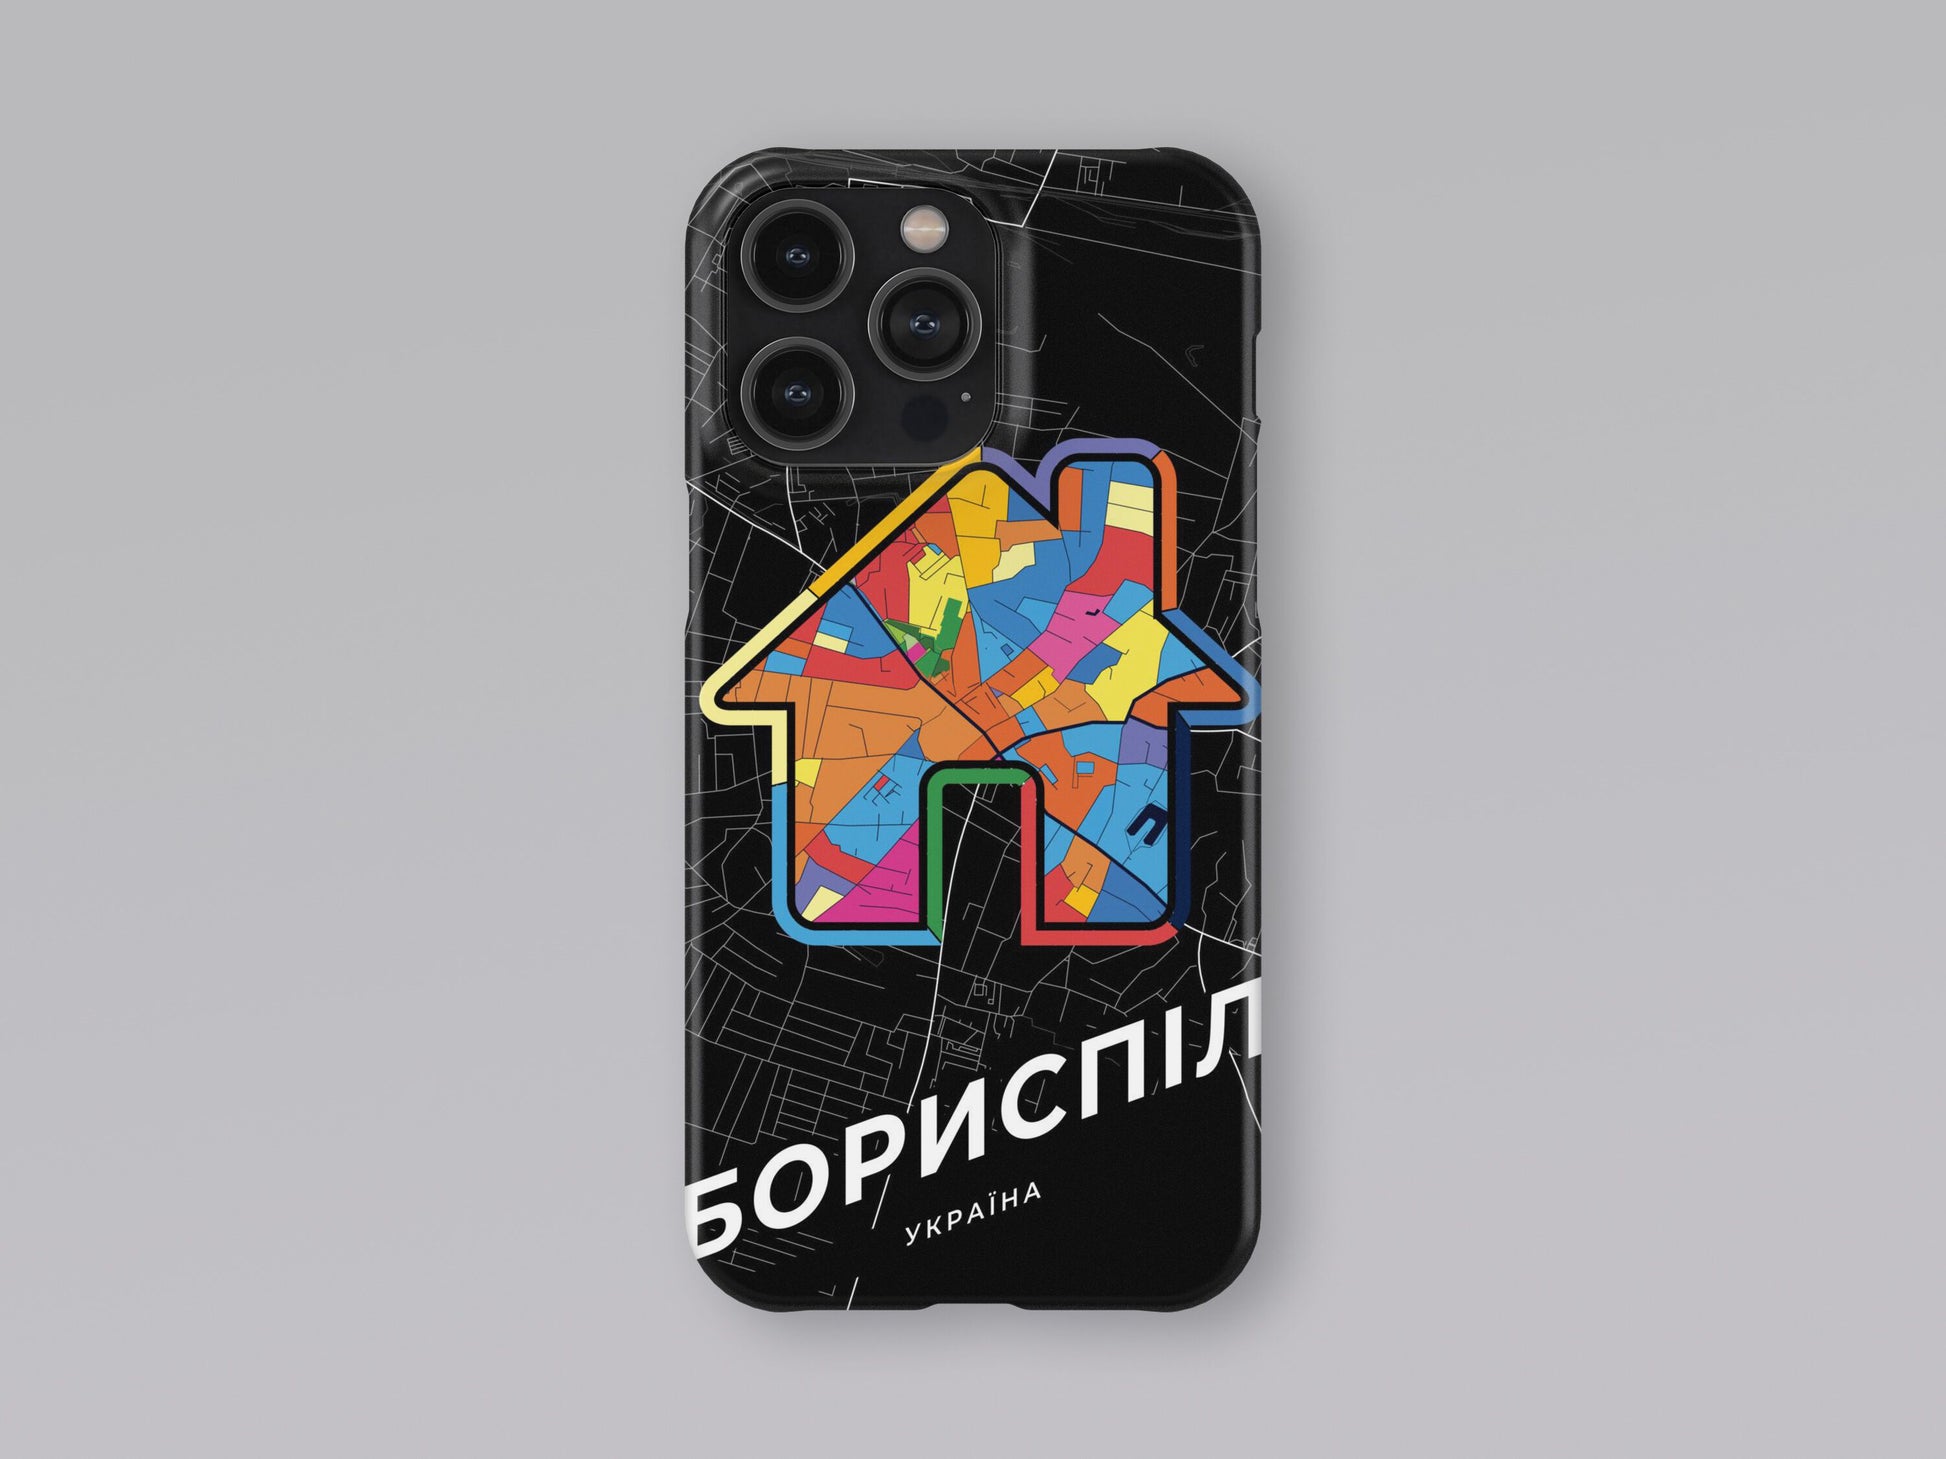 Boryspil Ukraine slim phone case with colorful icon. Birthday, wedding or housewarming gift. Couple match cases. 3